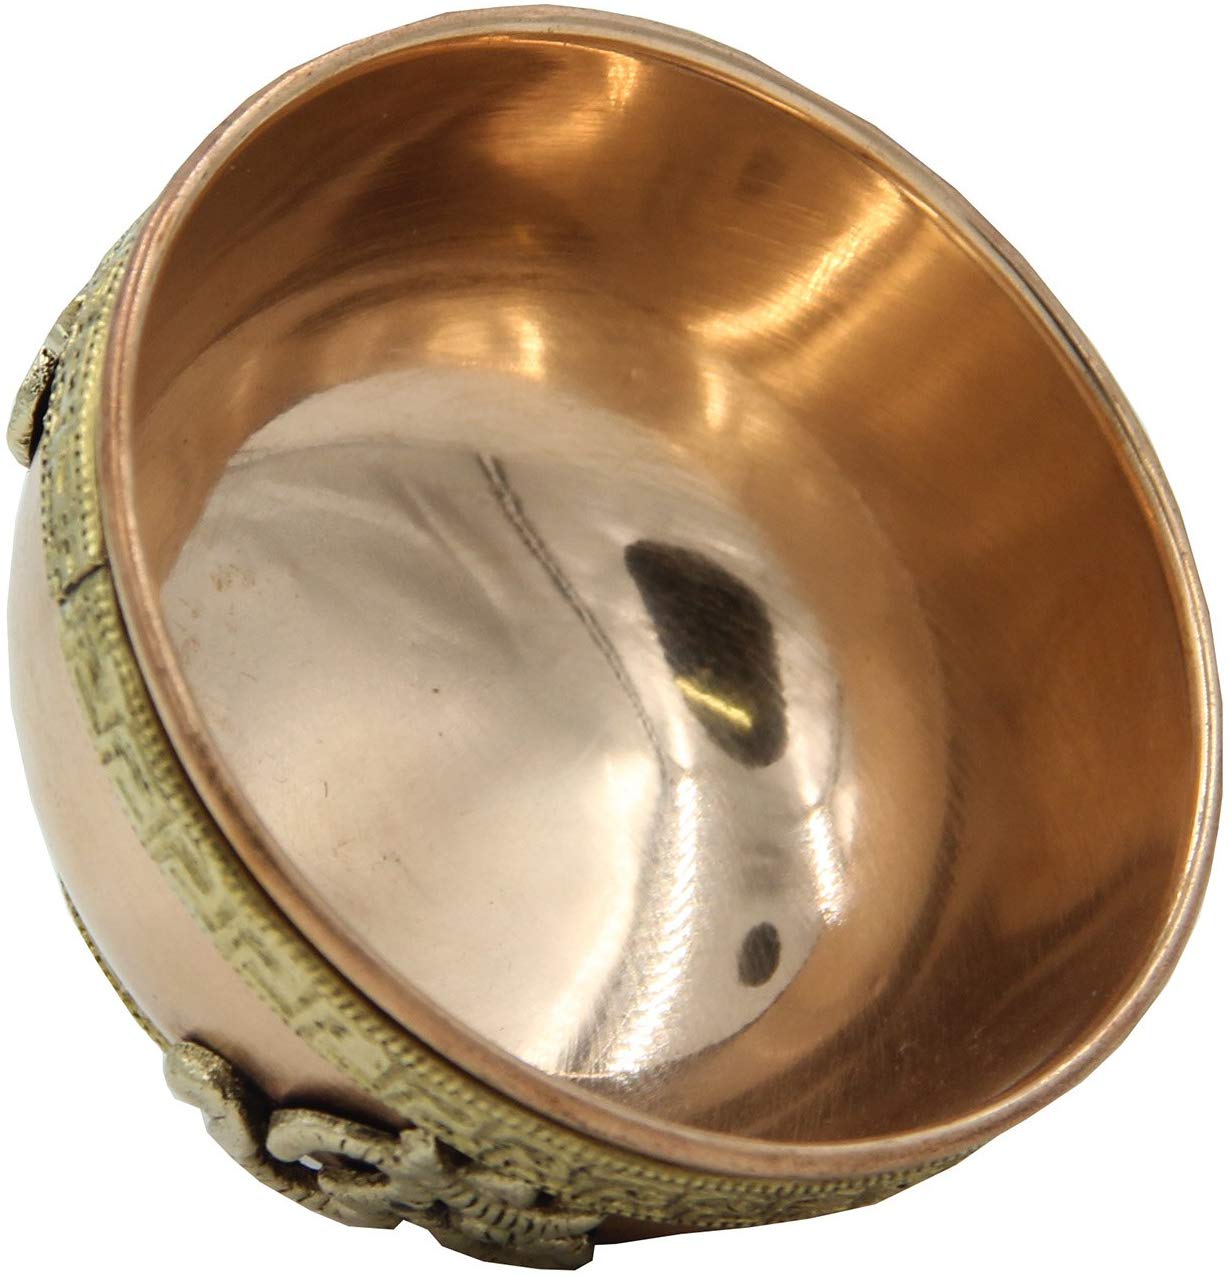 Copper Offering Bowl Incense Burner Holder (3 Inches, Om) - DharmaObjects